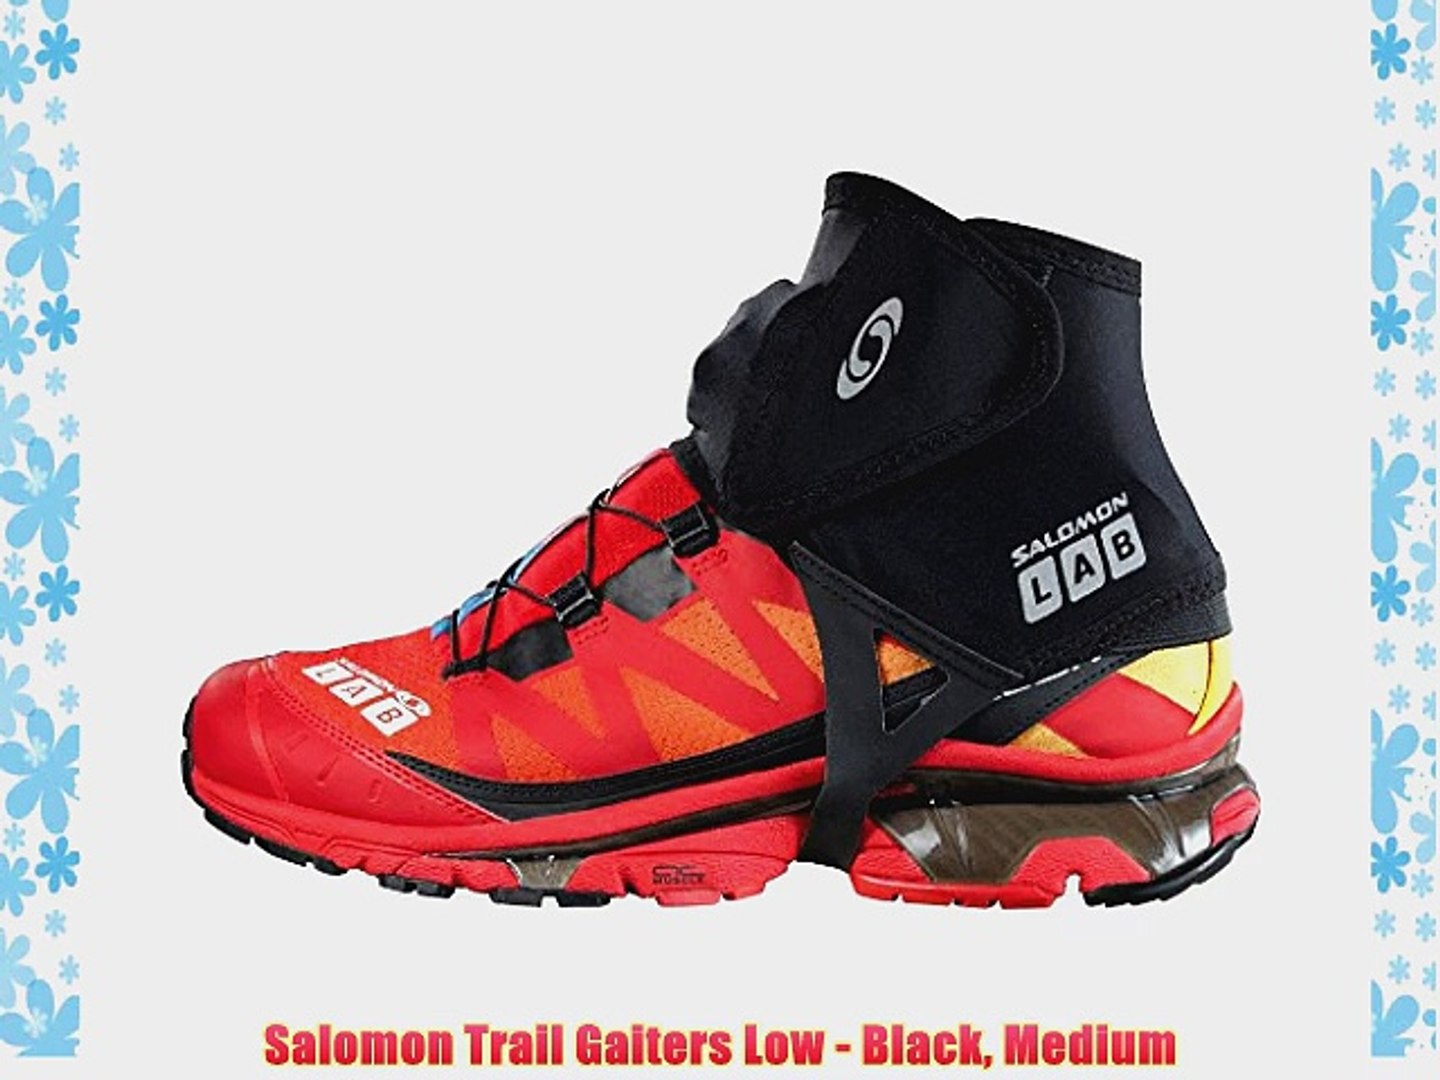 Salomon Trail Gaiters Low - Black Medium - video Dailymotion